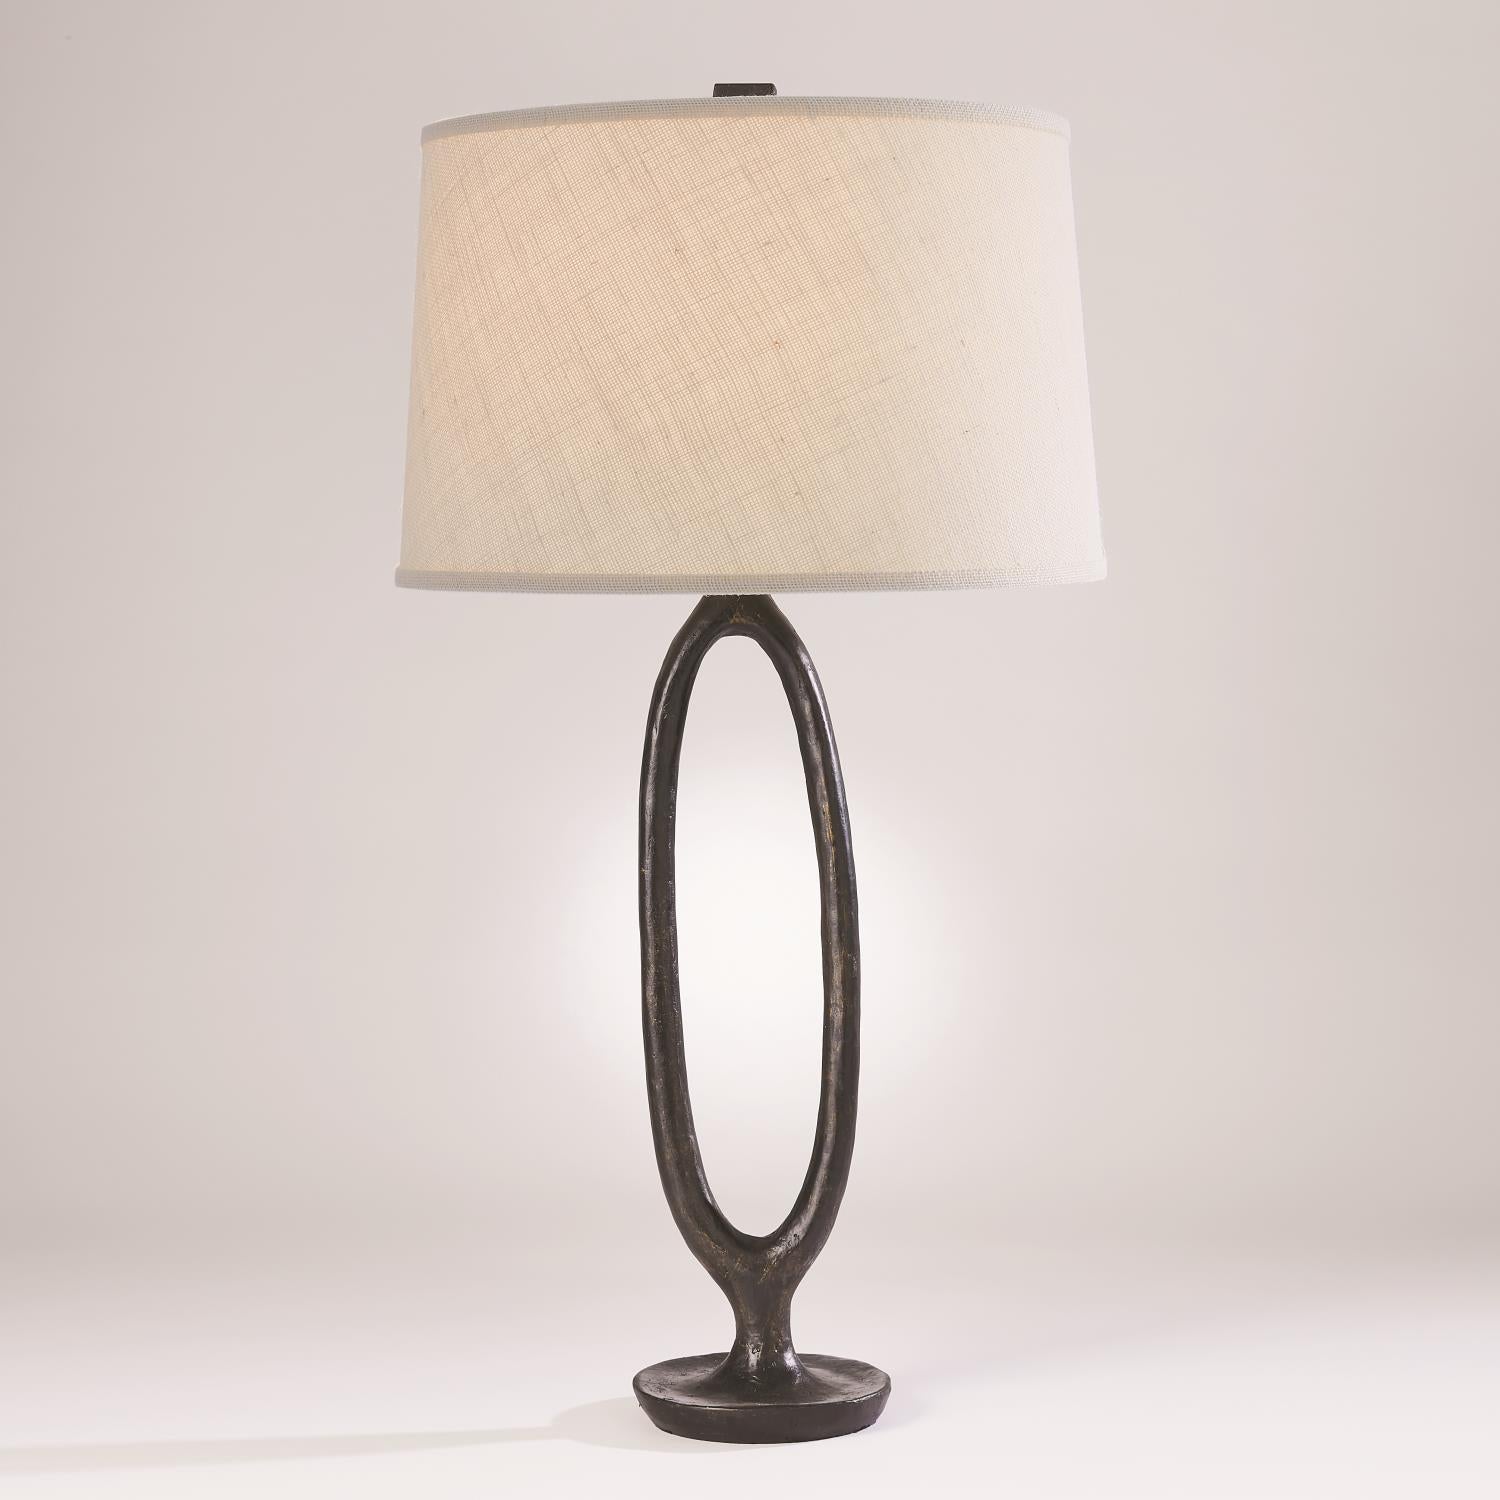 Ellipse Table Lamp - Bronze - Grats Decor Interior Design & Build Inc.